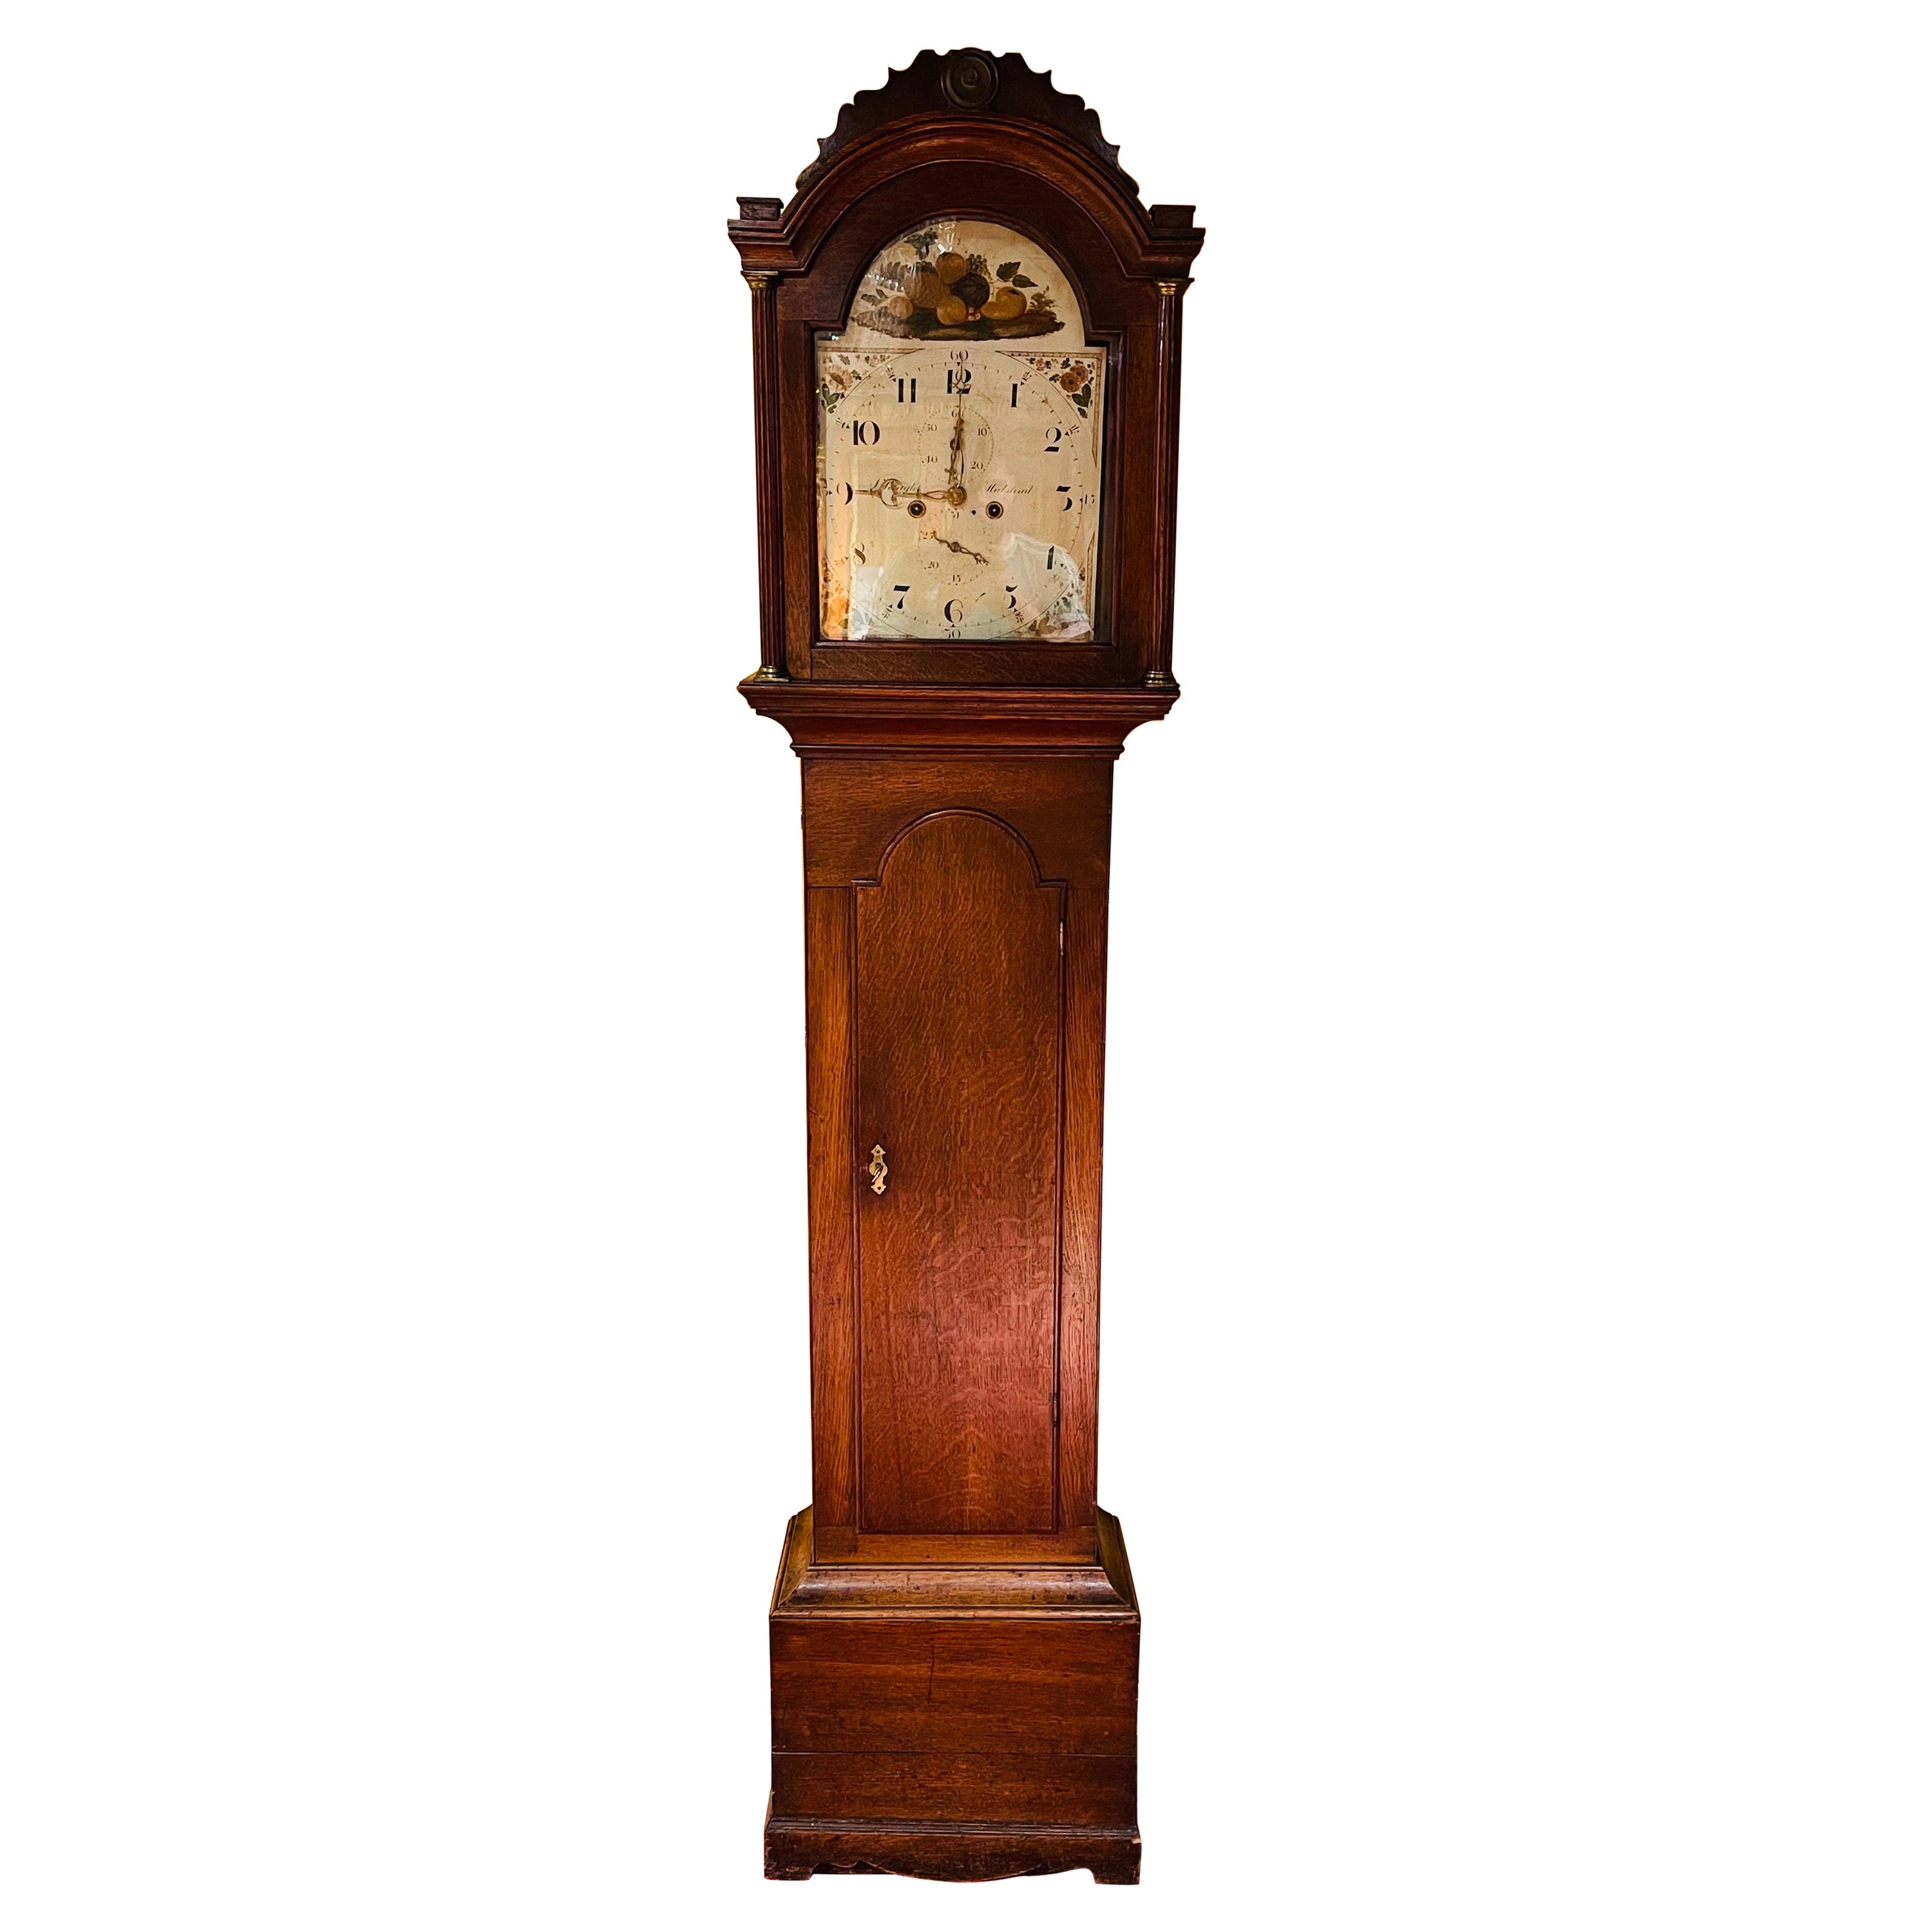 Grandfather Clock Door Steel Lock & Brass Key Set NEW Tall Case Style Antique 